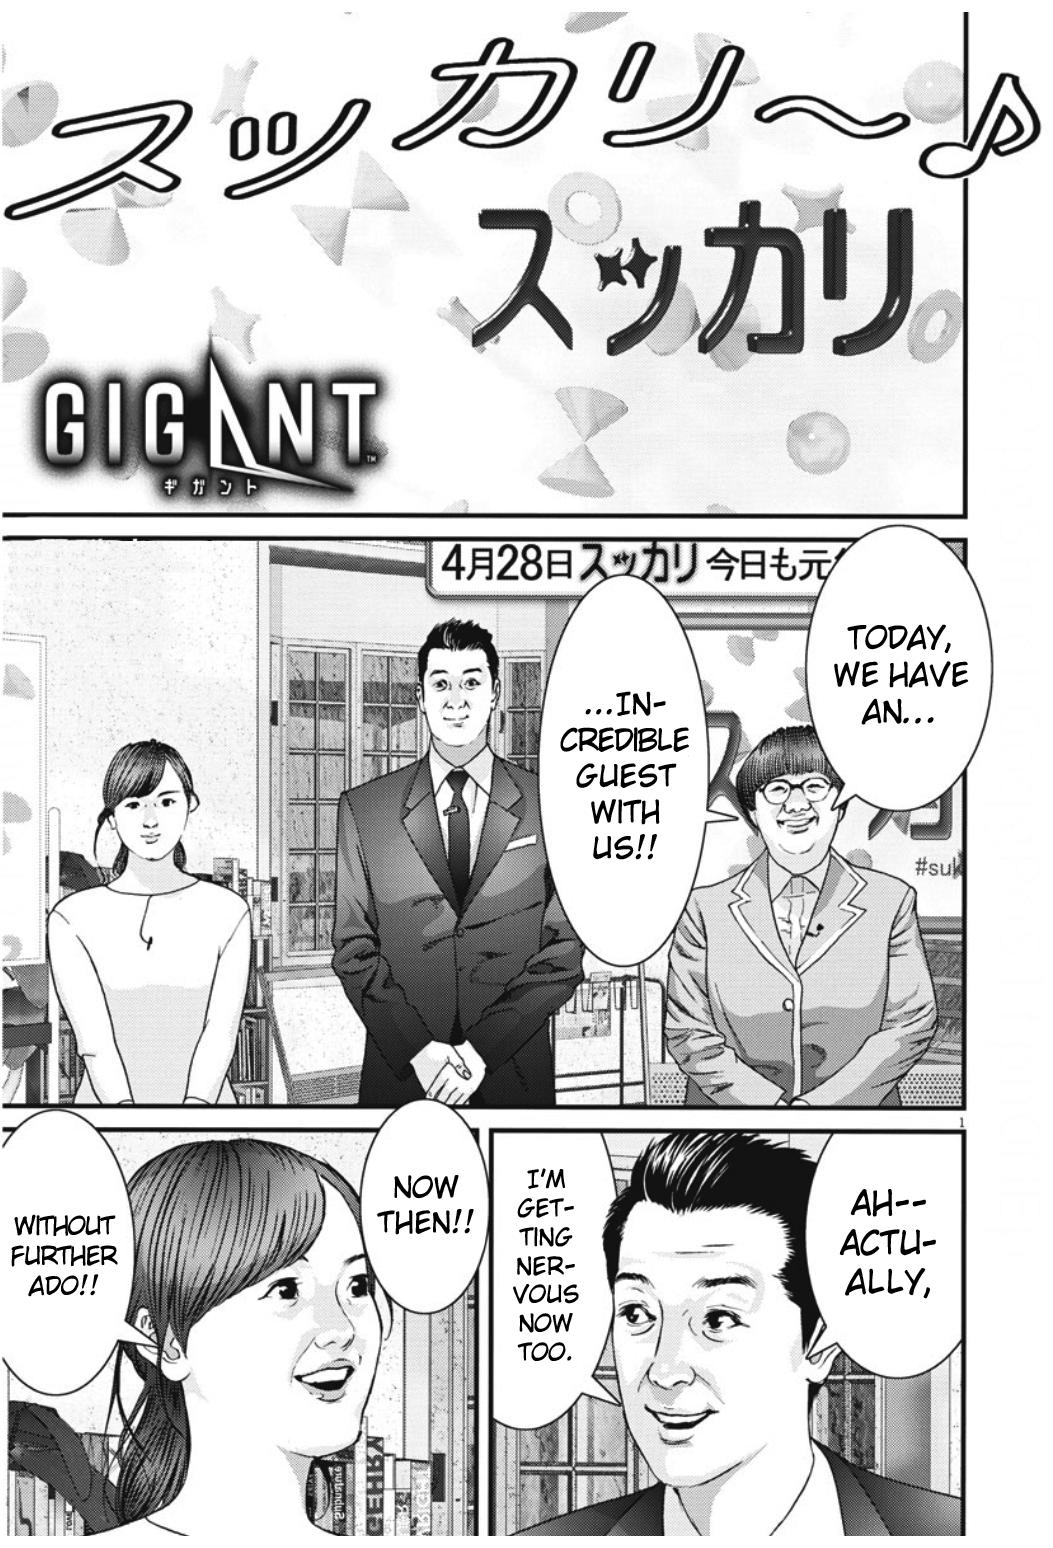 read-gigant-chapter-43-saviour-on-mangakakalot